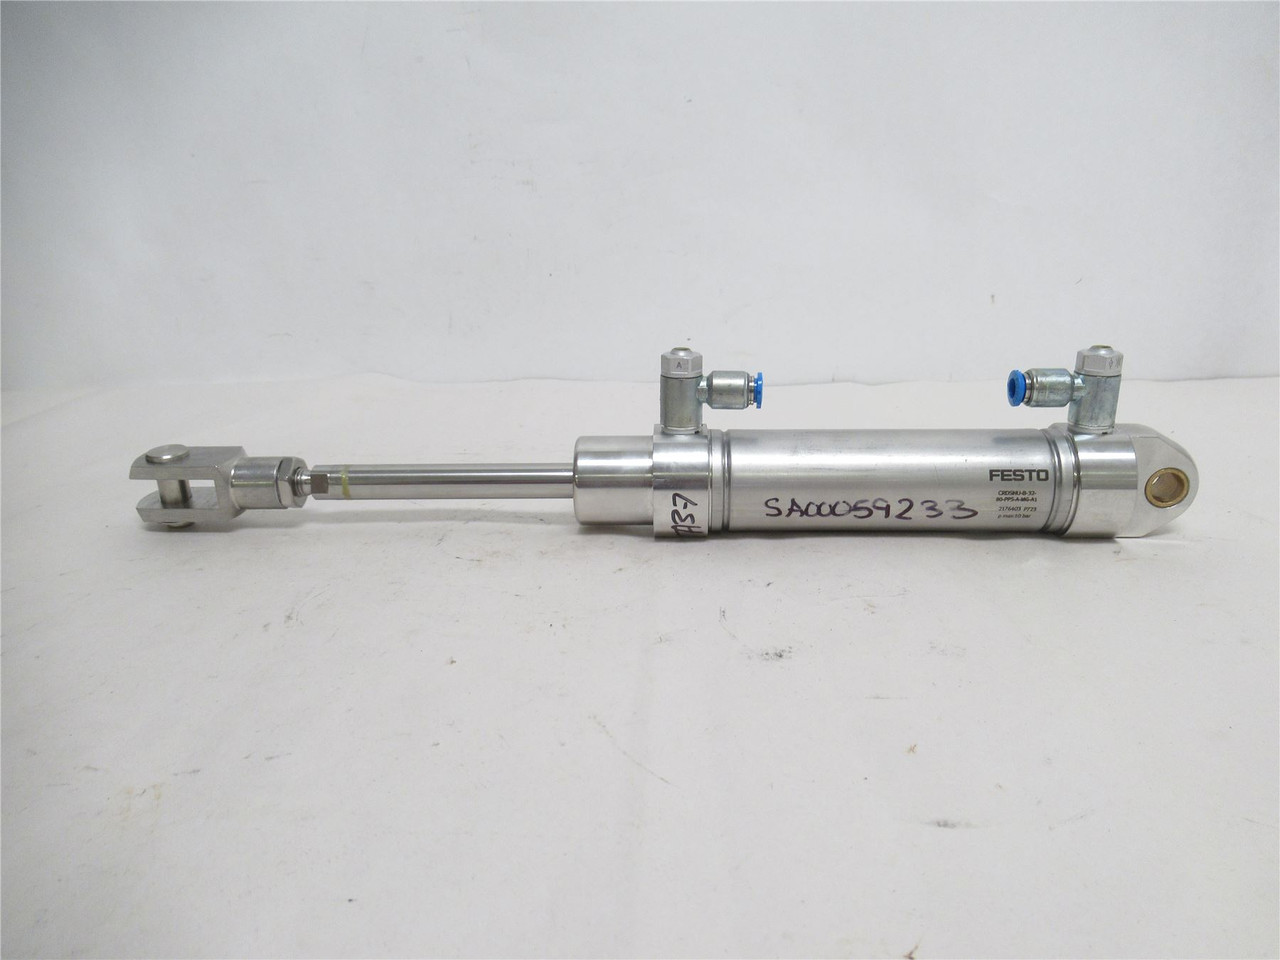 Festo CRDSNU-B-32-80-PPS-A-MG-A1; Air Cylinder 2176403; 32mmID